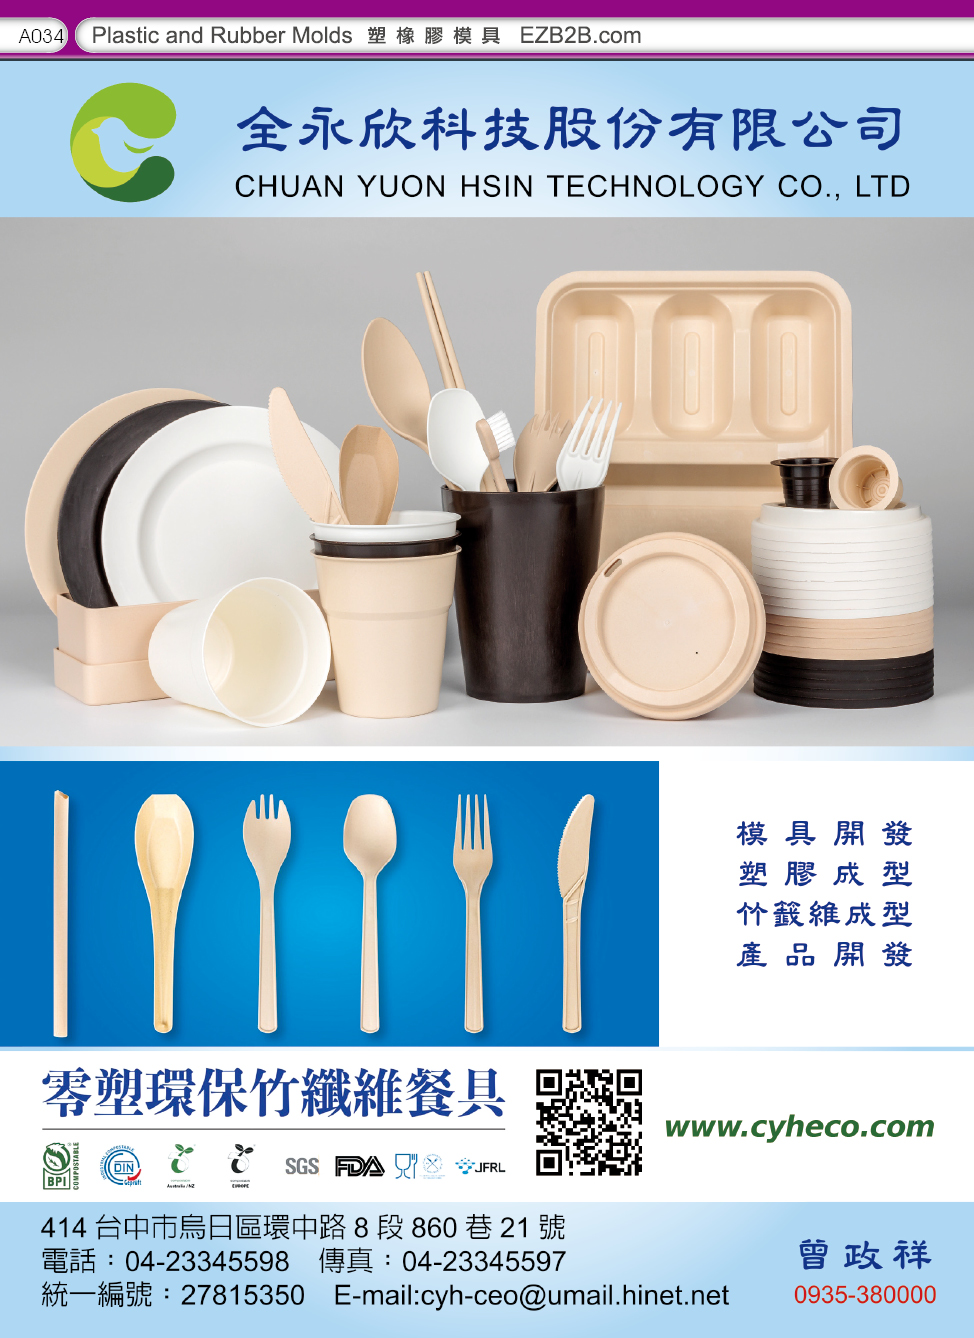 CHUAN YUON HSIN TECHNOLOGY CO., LTD.